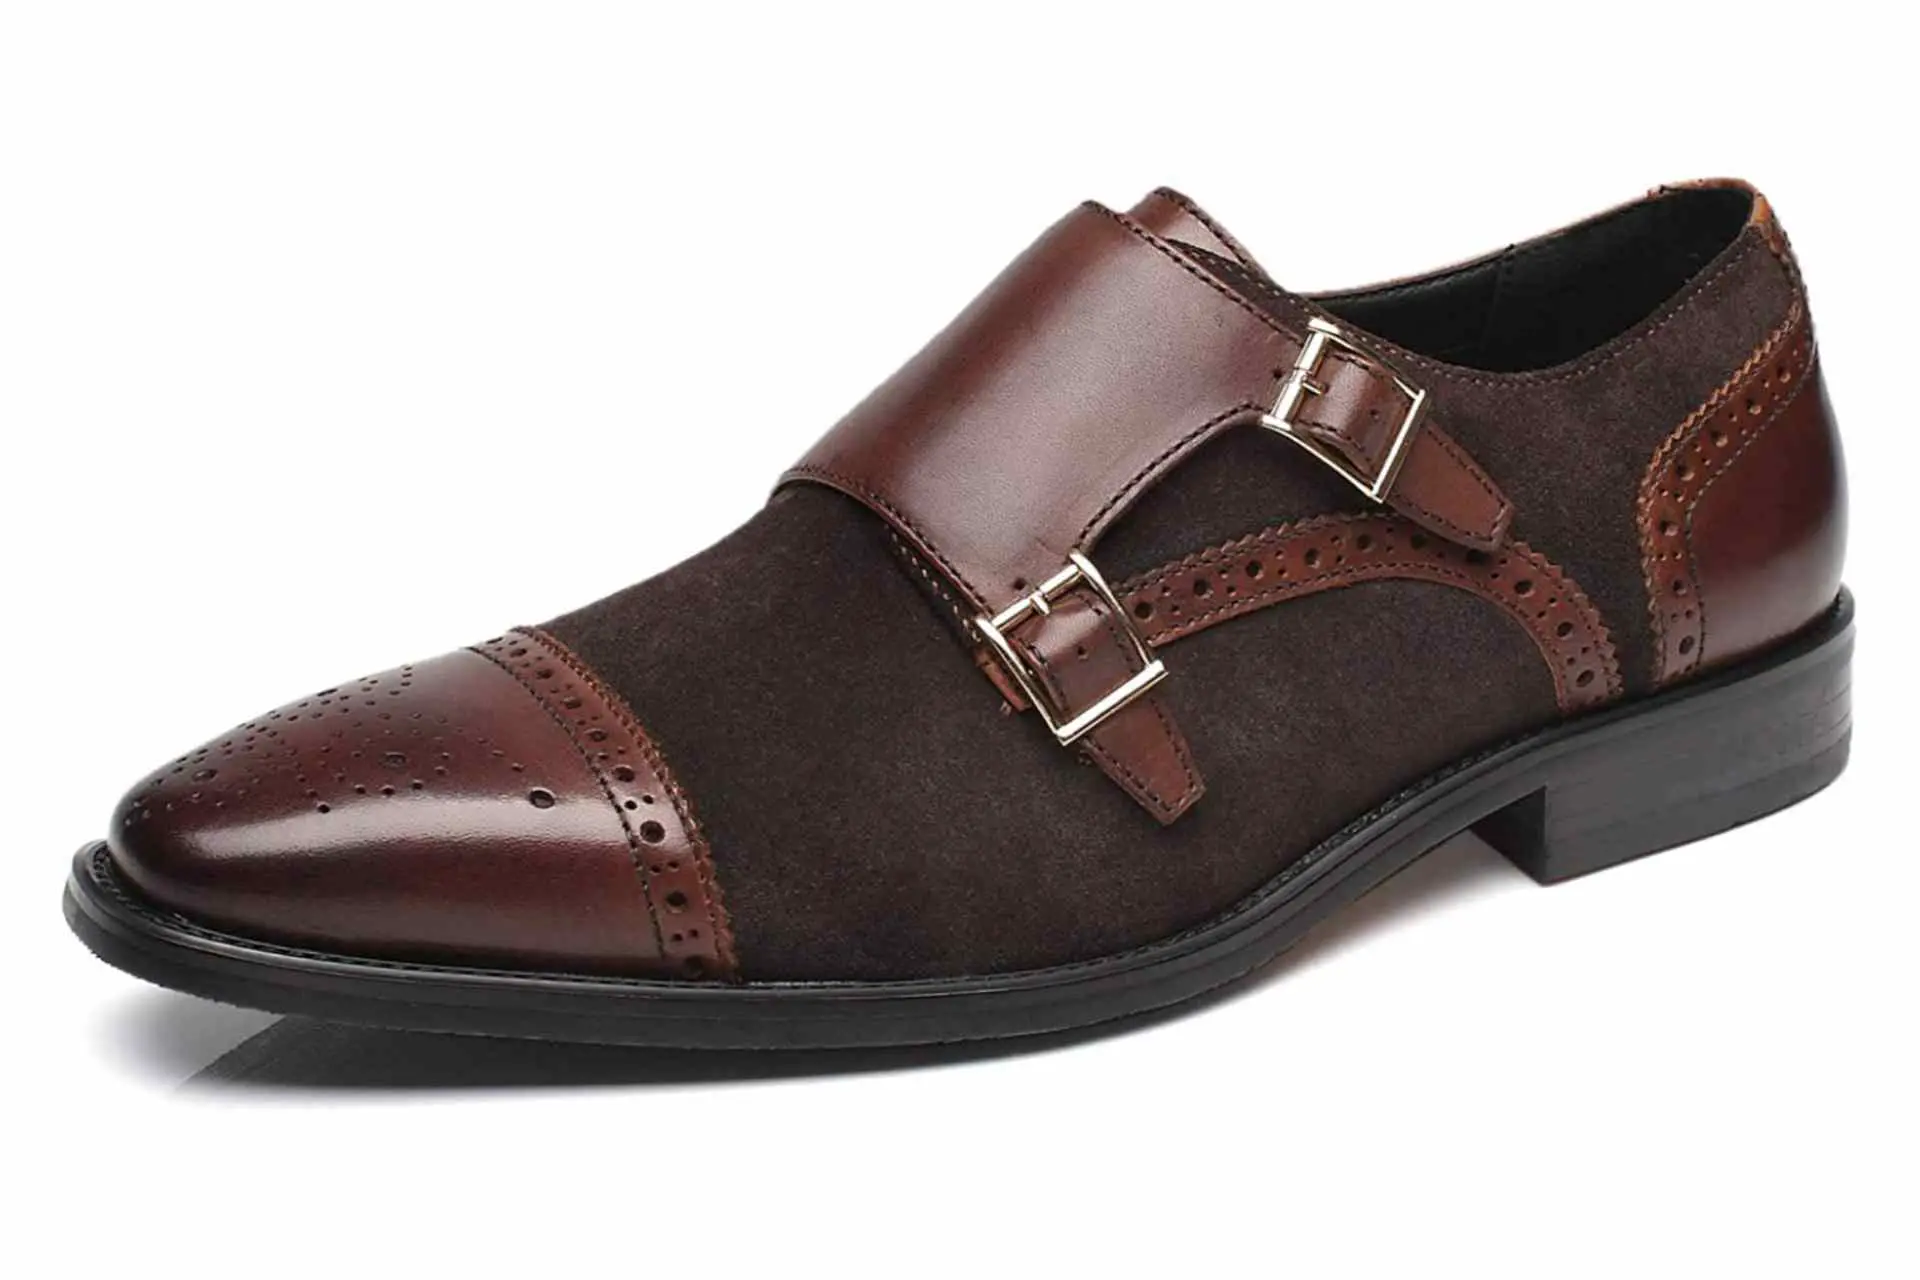 Best brown double Monk Strap shoes for men